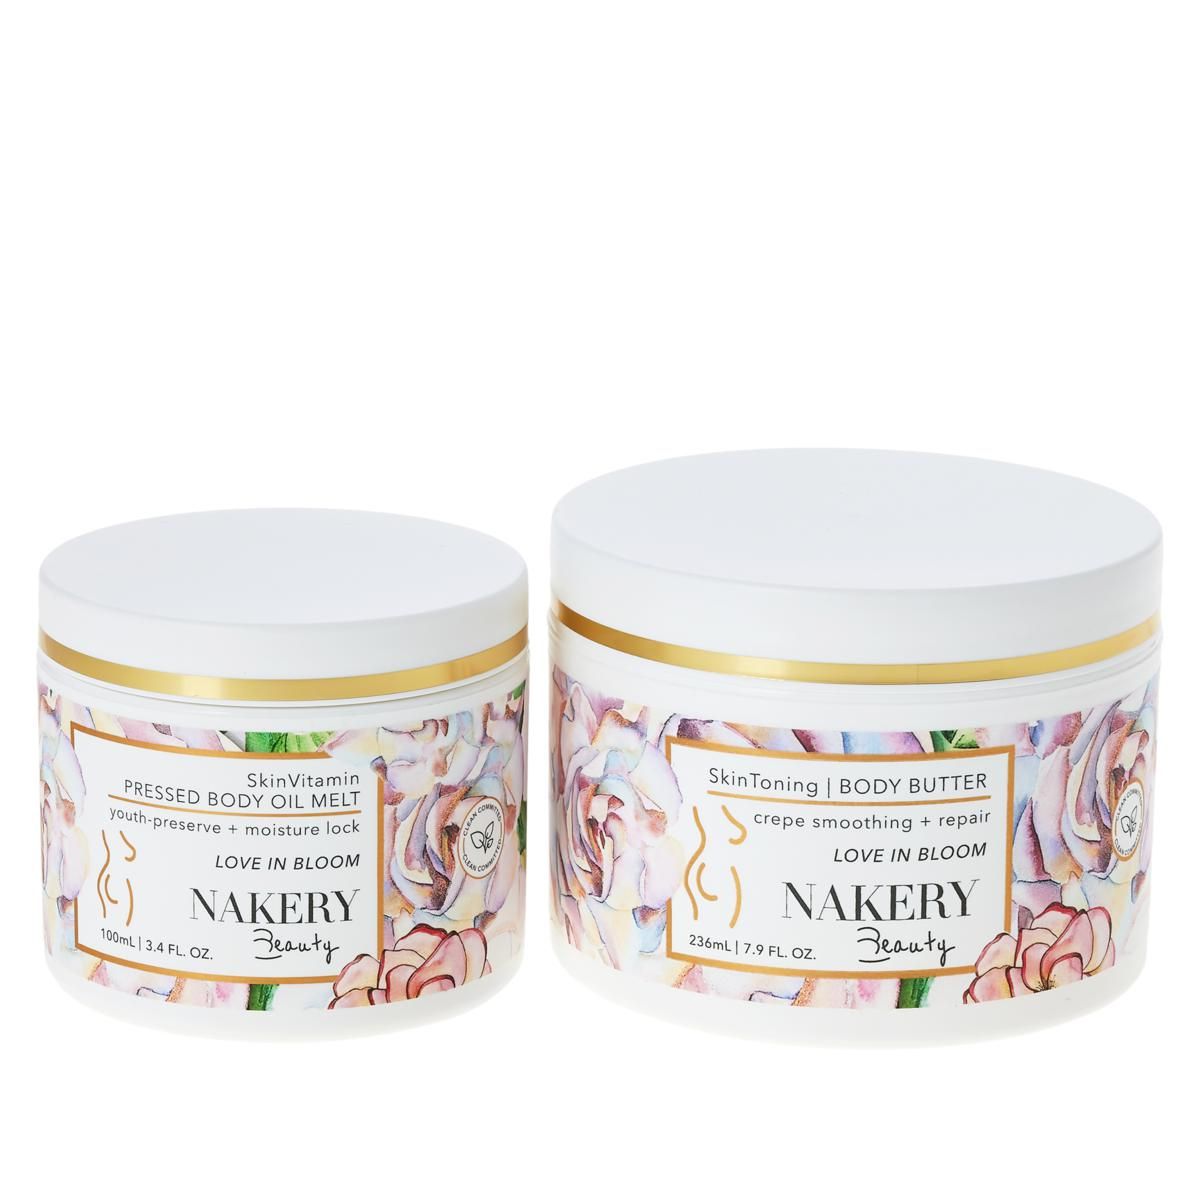 Nakery Beauty Love in Bloom Body Butter & Pressed Body Oil | HSN